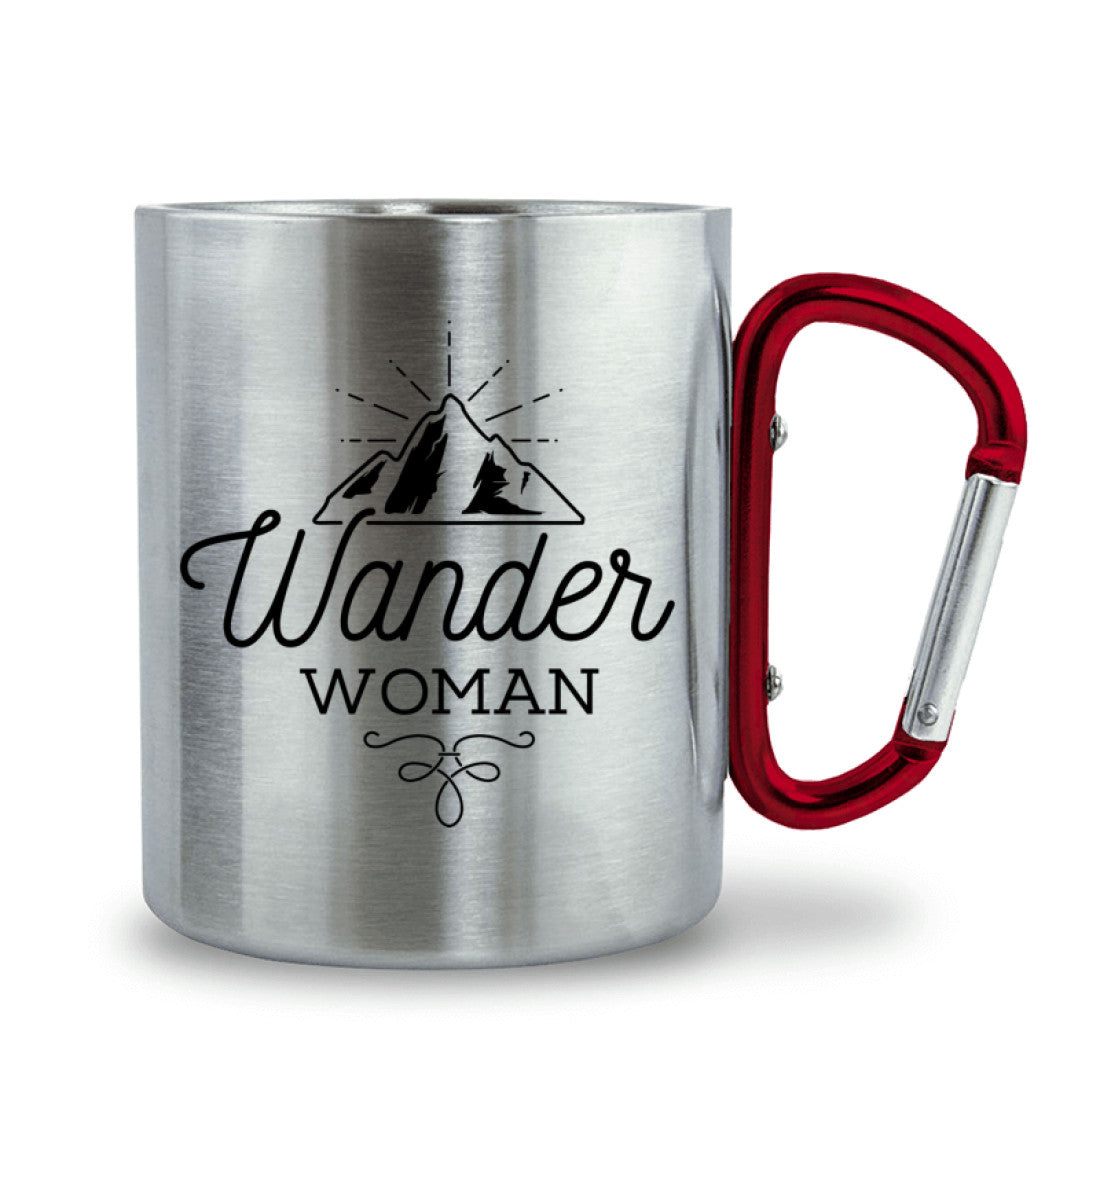 Wander Woman - Karabiner Tasse wandern 330ml